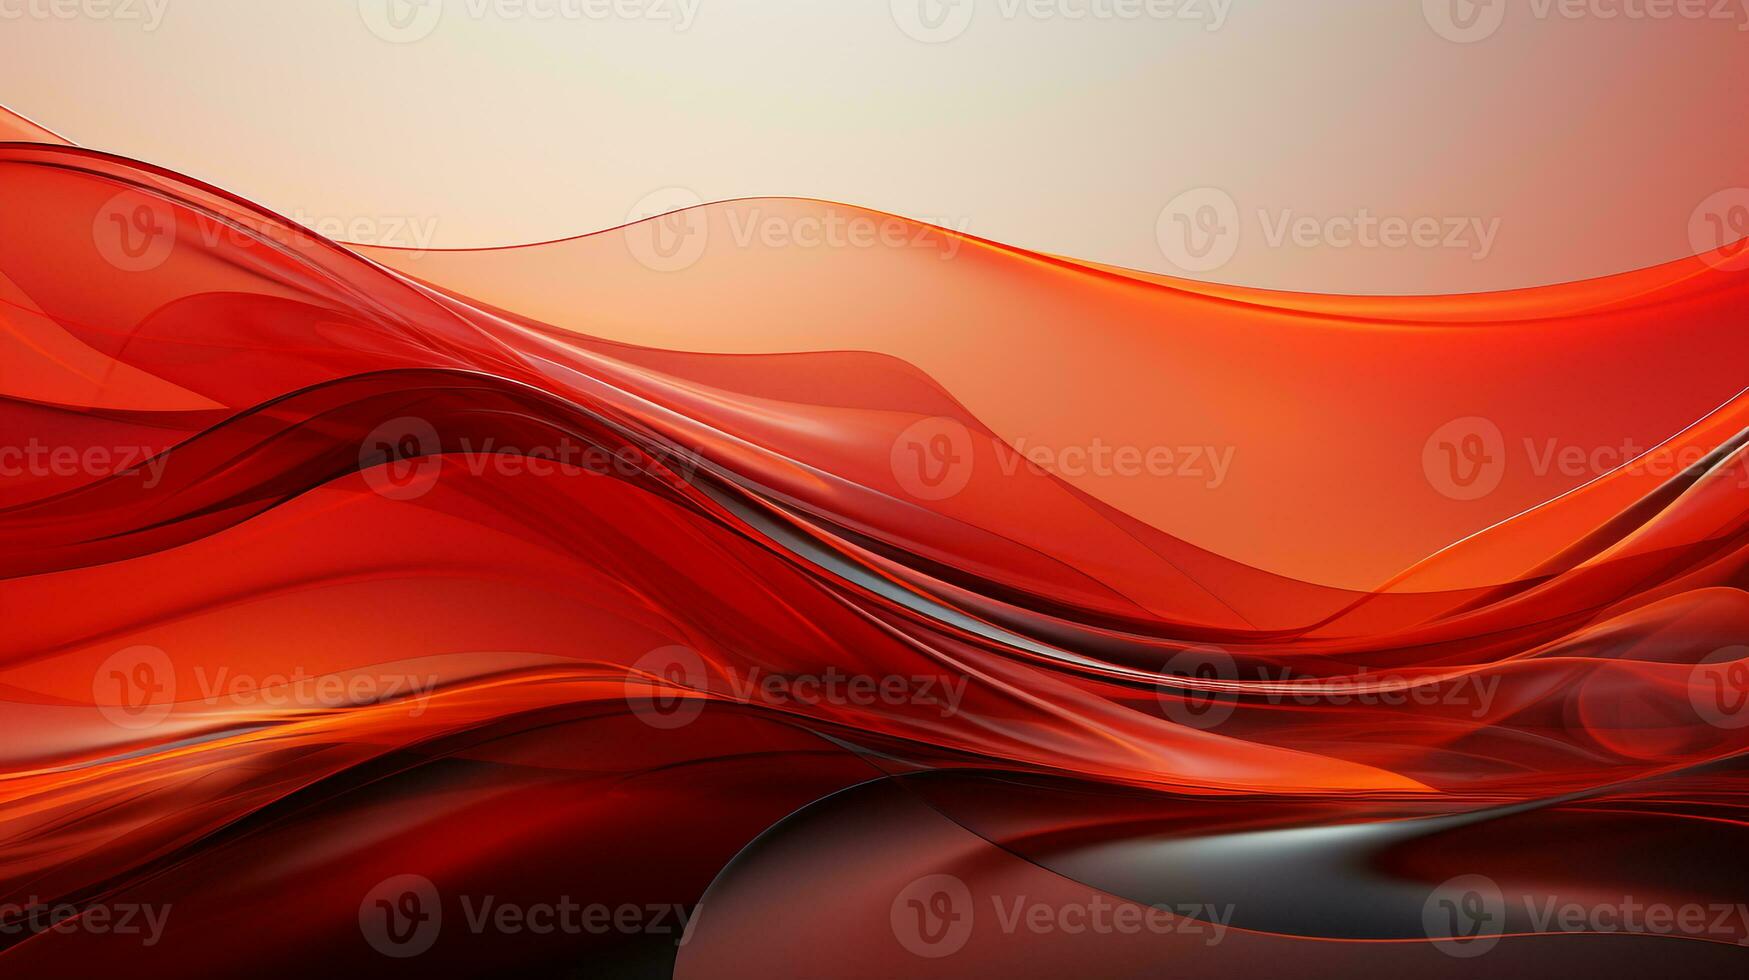 Elegant red graphic background photo